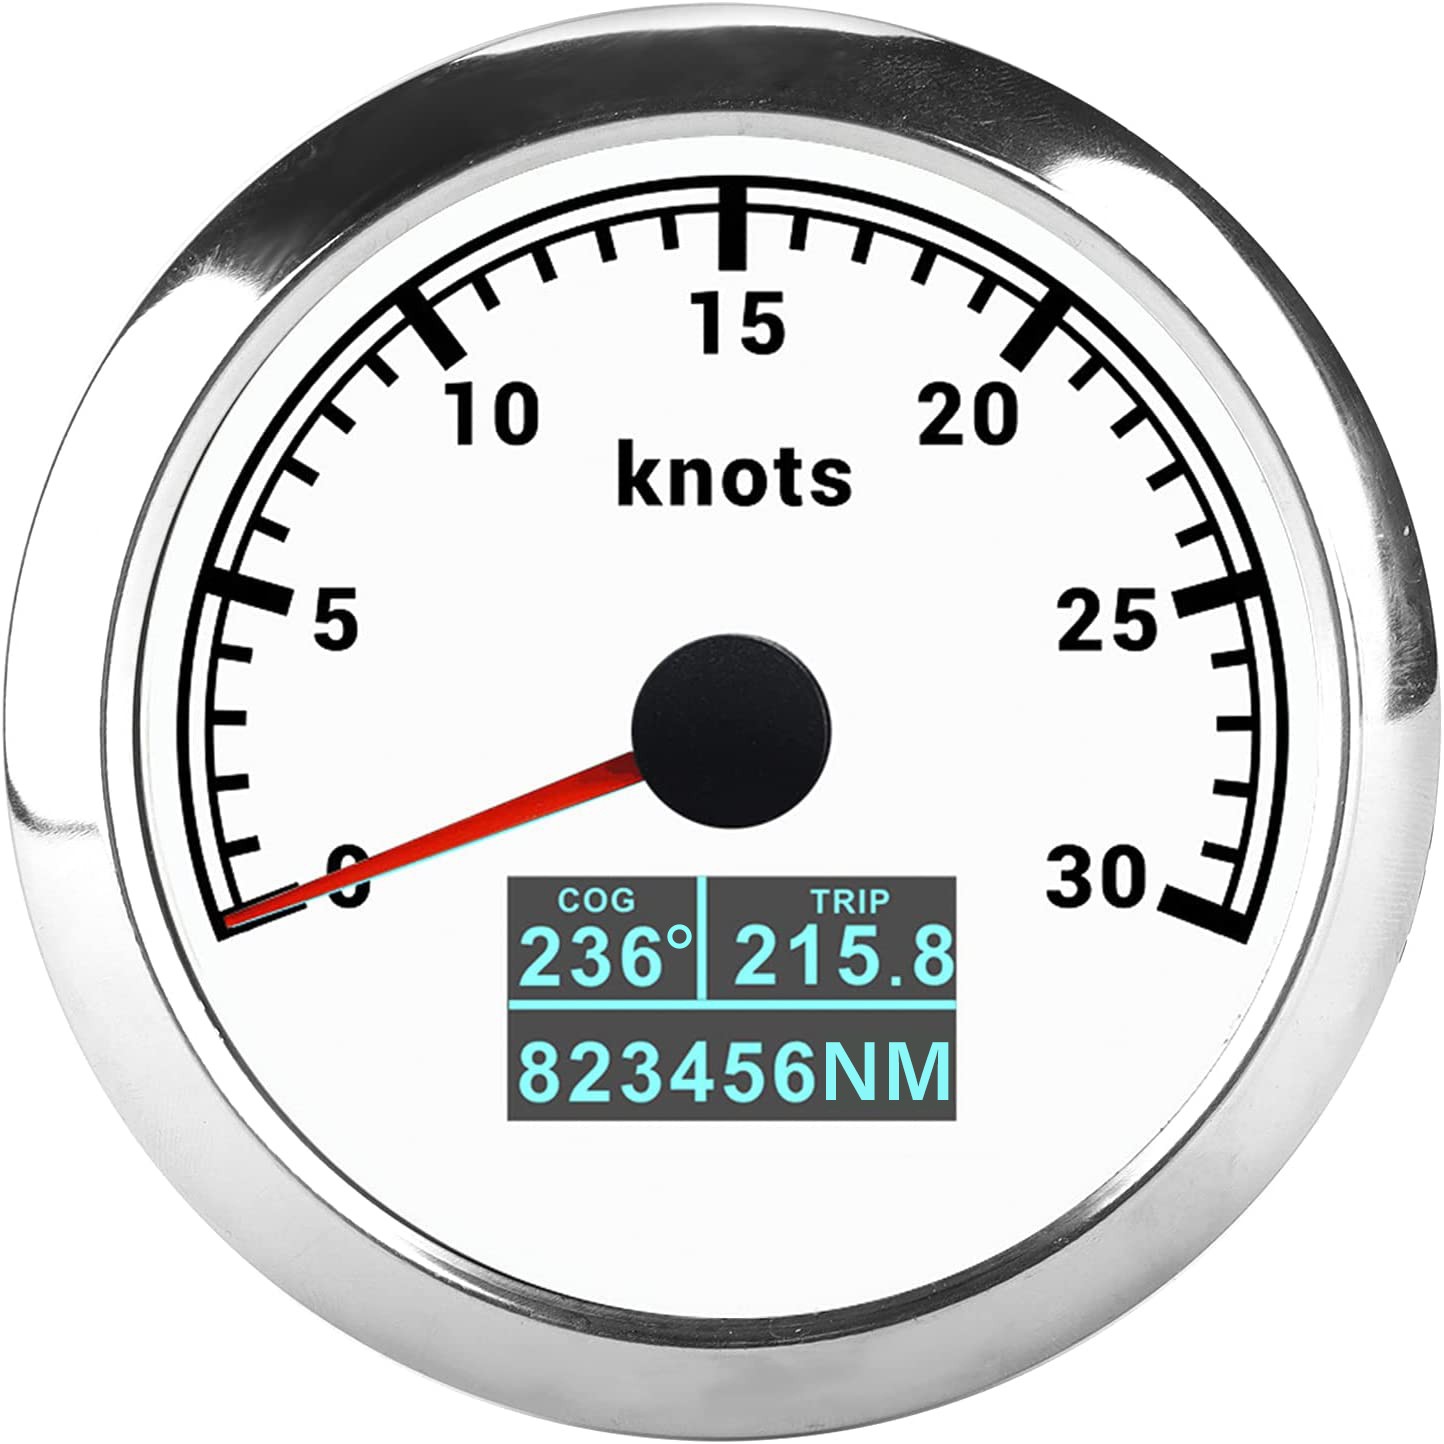 ELING OLED GPS Speedometer 30Knots 60Knots